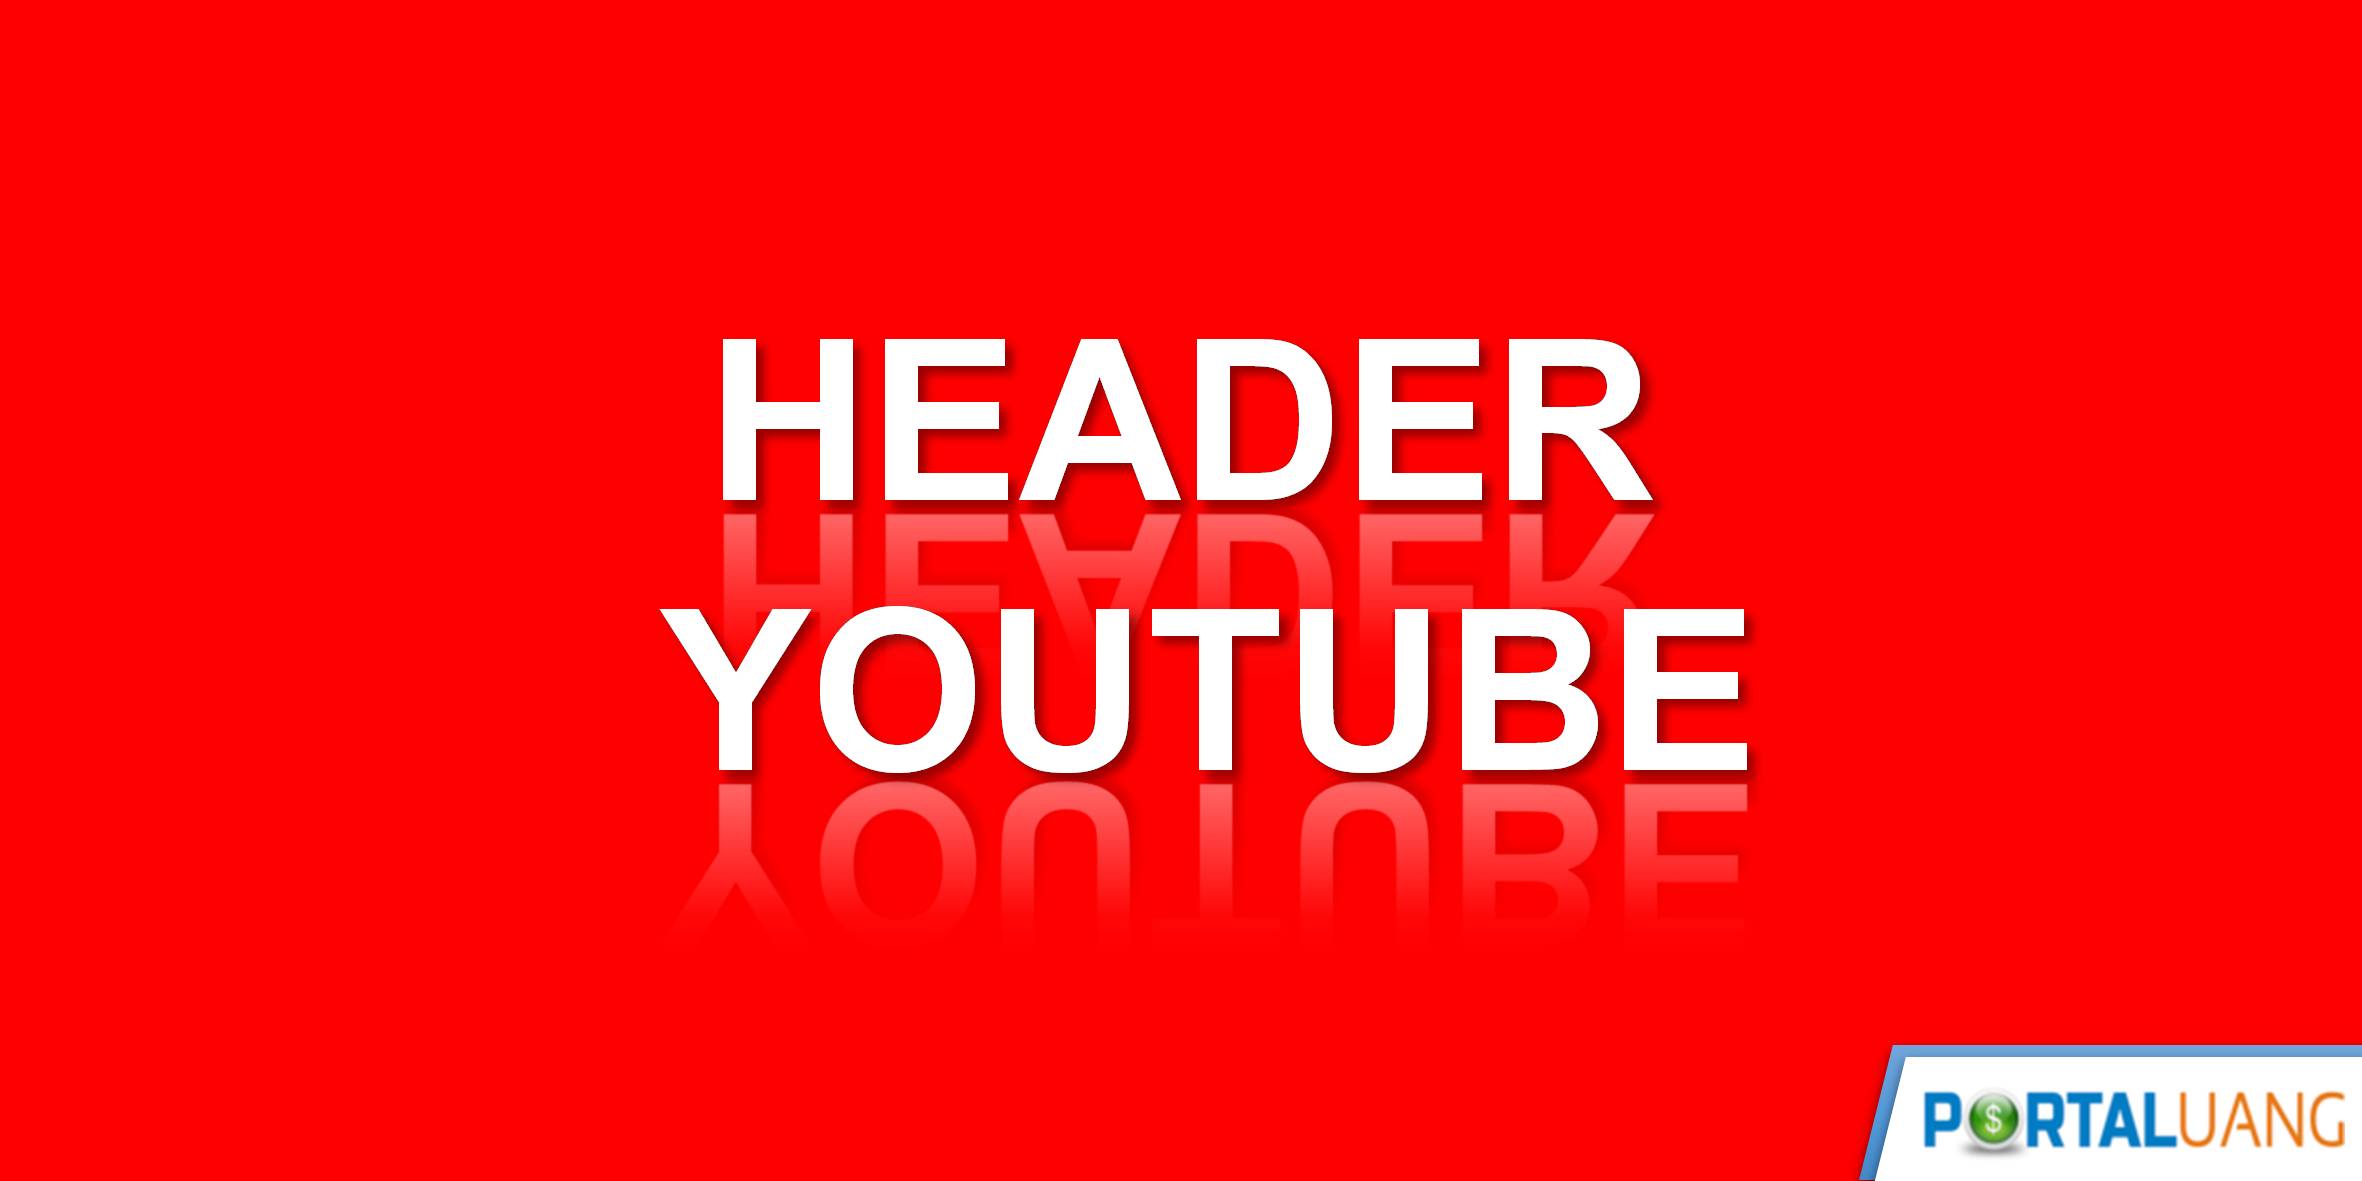 Cara Buat Header Youtube. Header Youtube : Contoh, Ukuran, Cara Membuat dan Mengganti